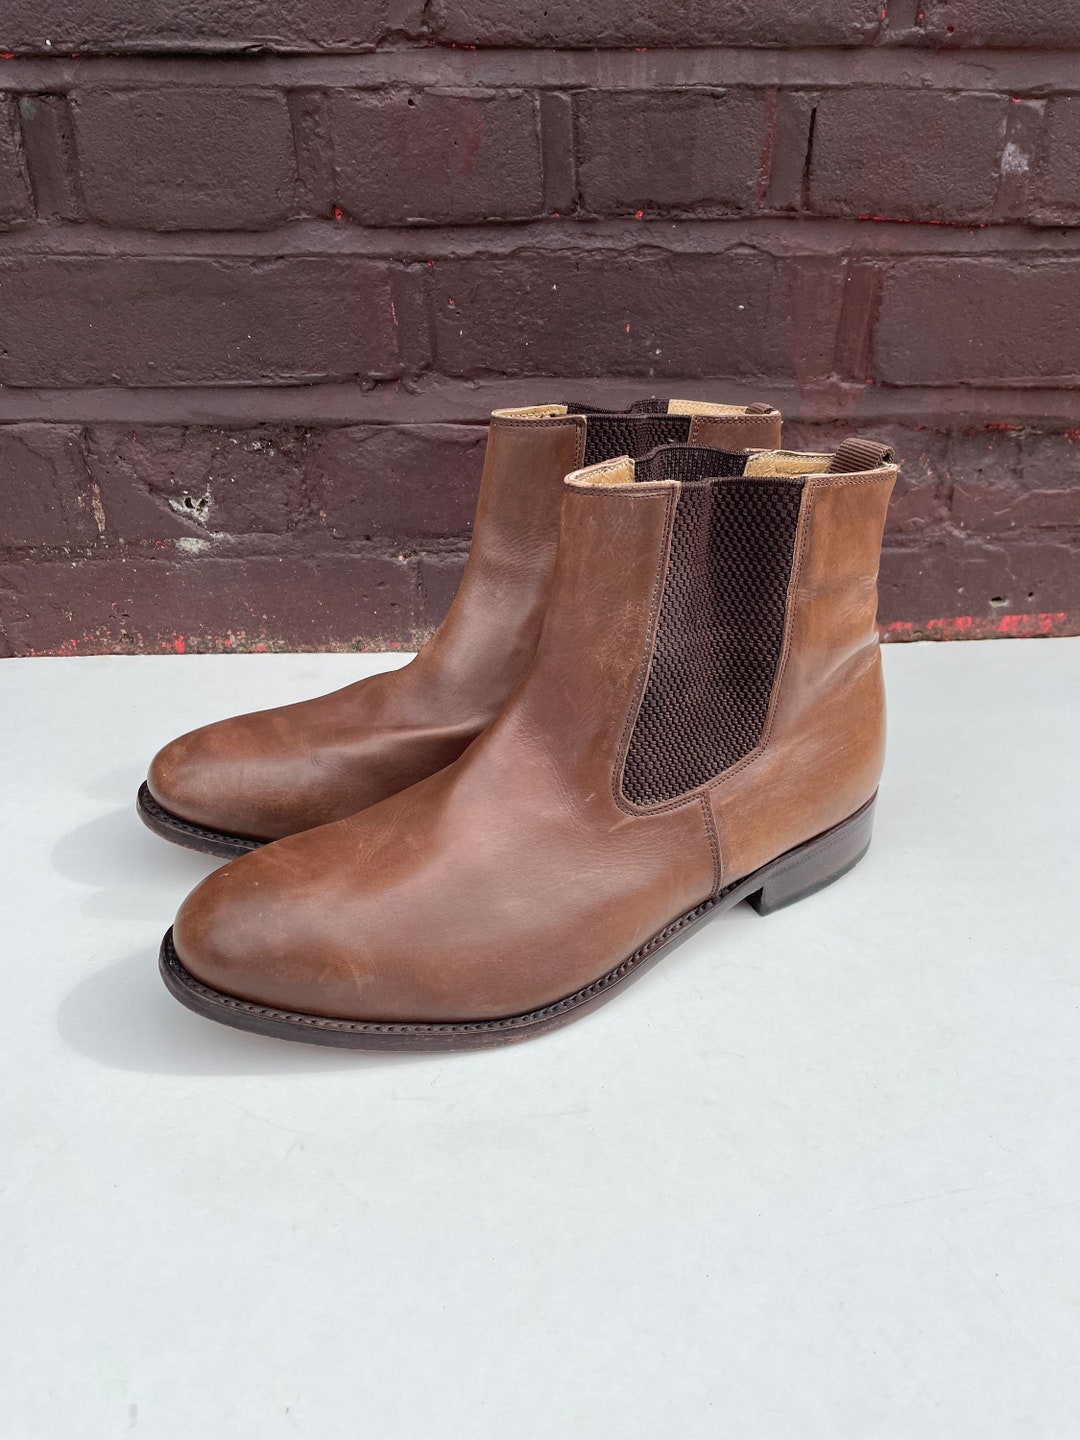 Samuel Windsor Brown Leather Chelsea Boots 9 1/2 - Etsy UK